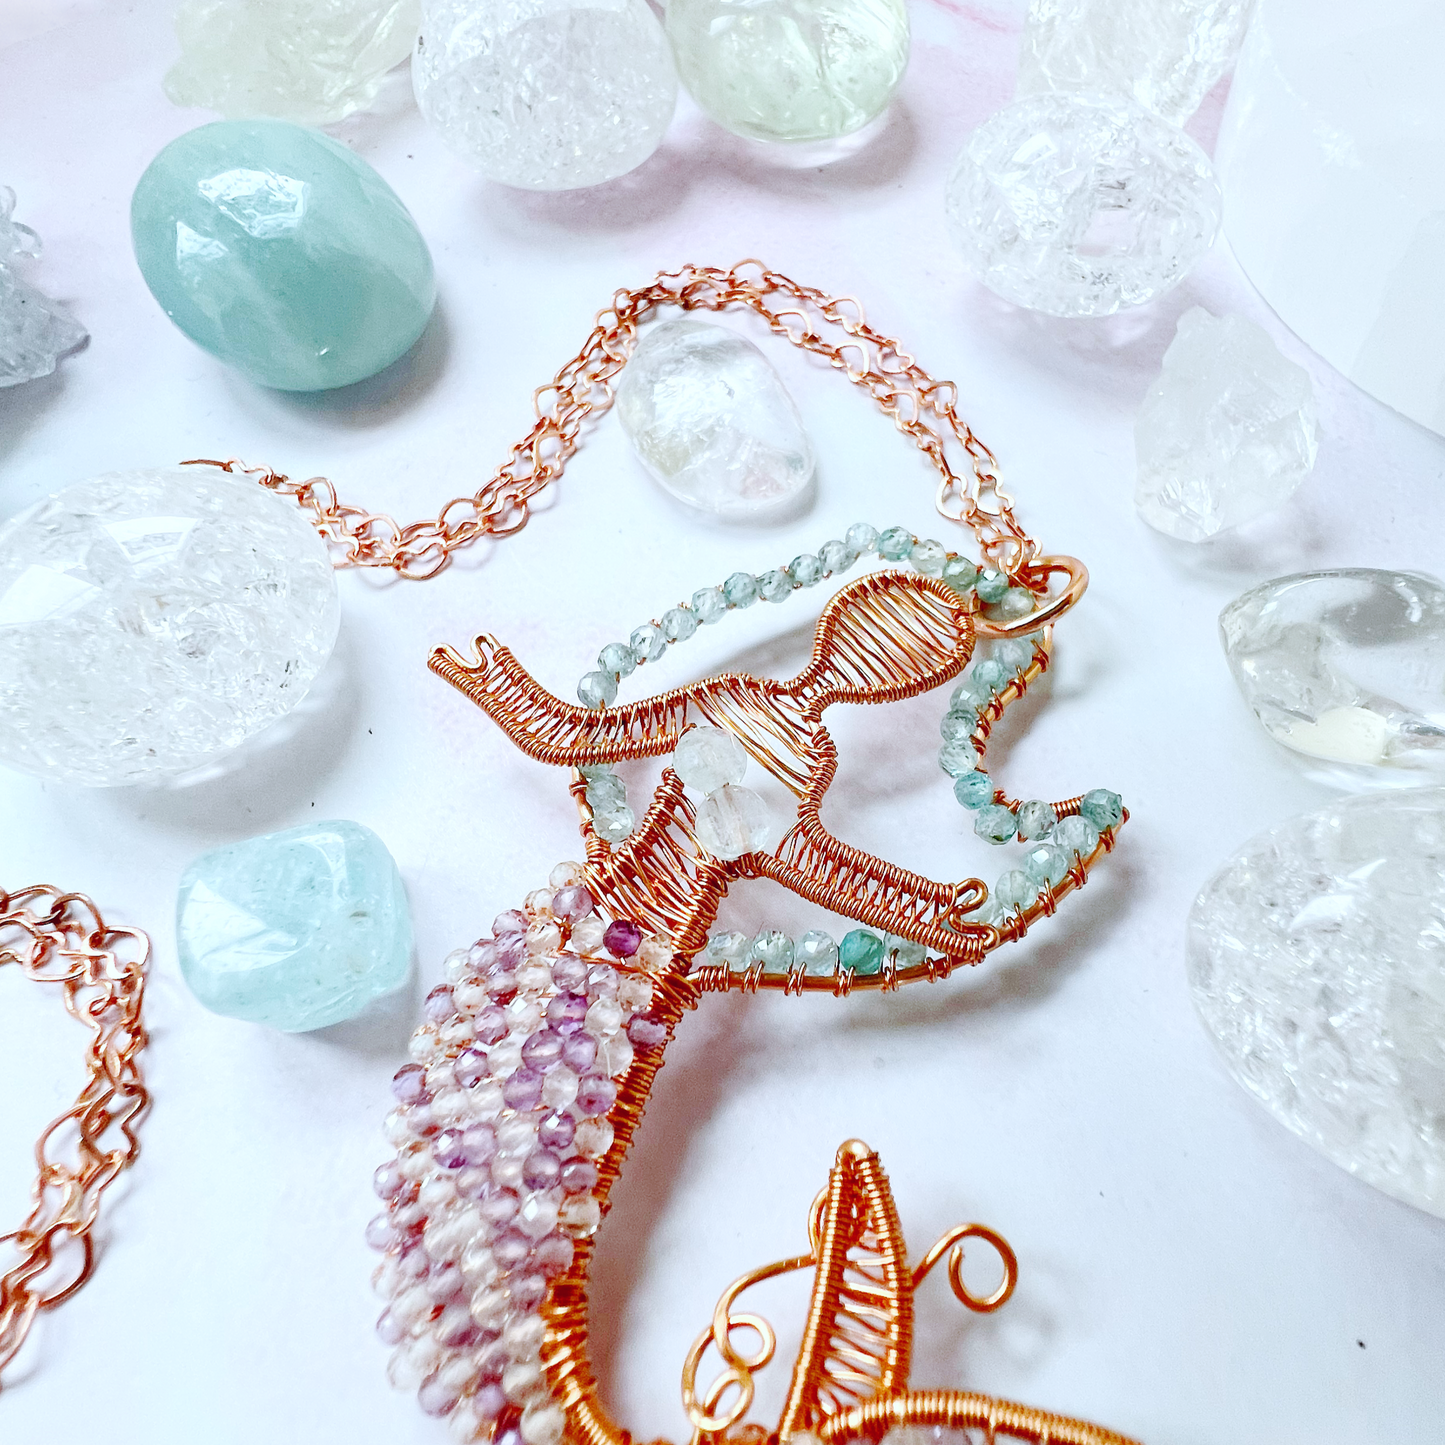 Mermaid necklace